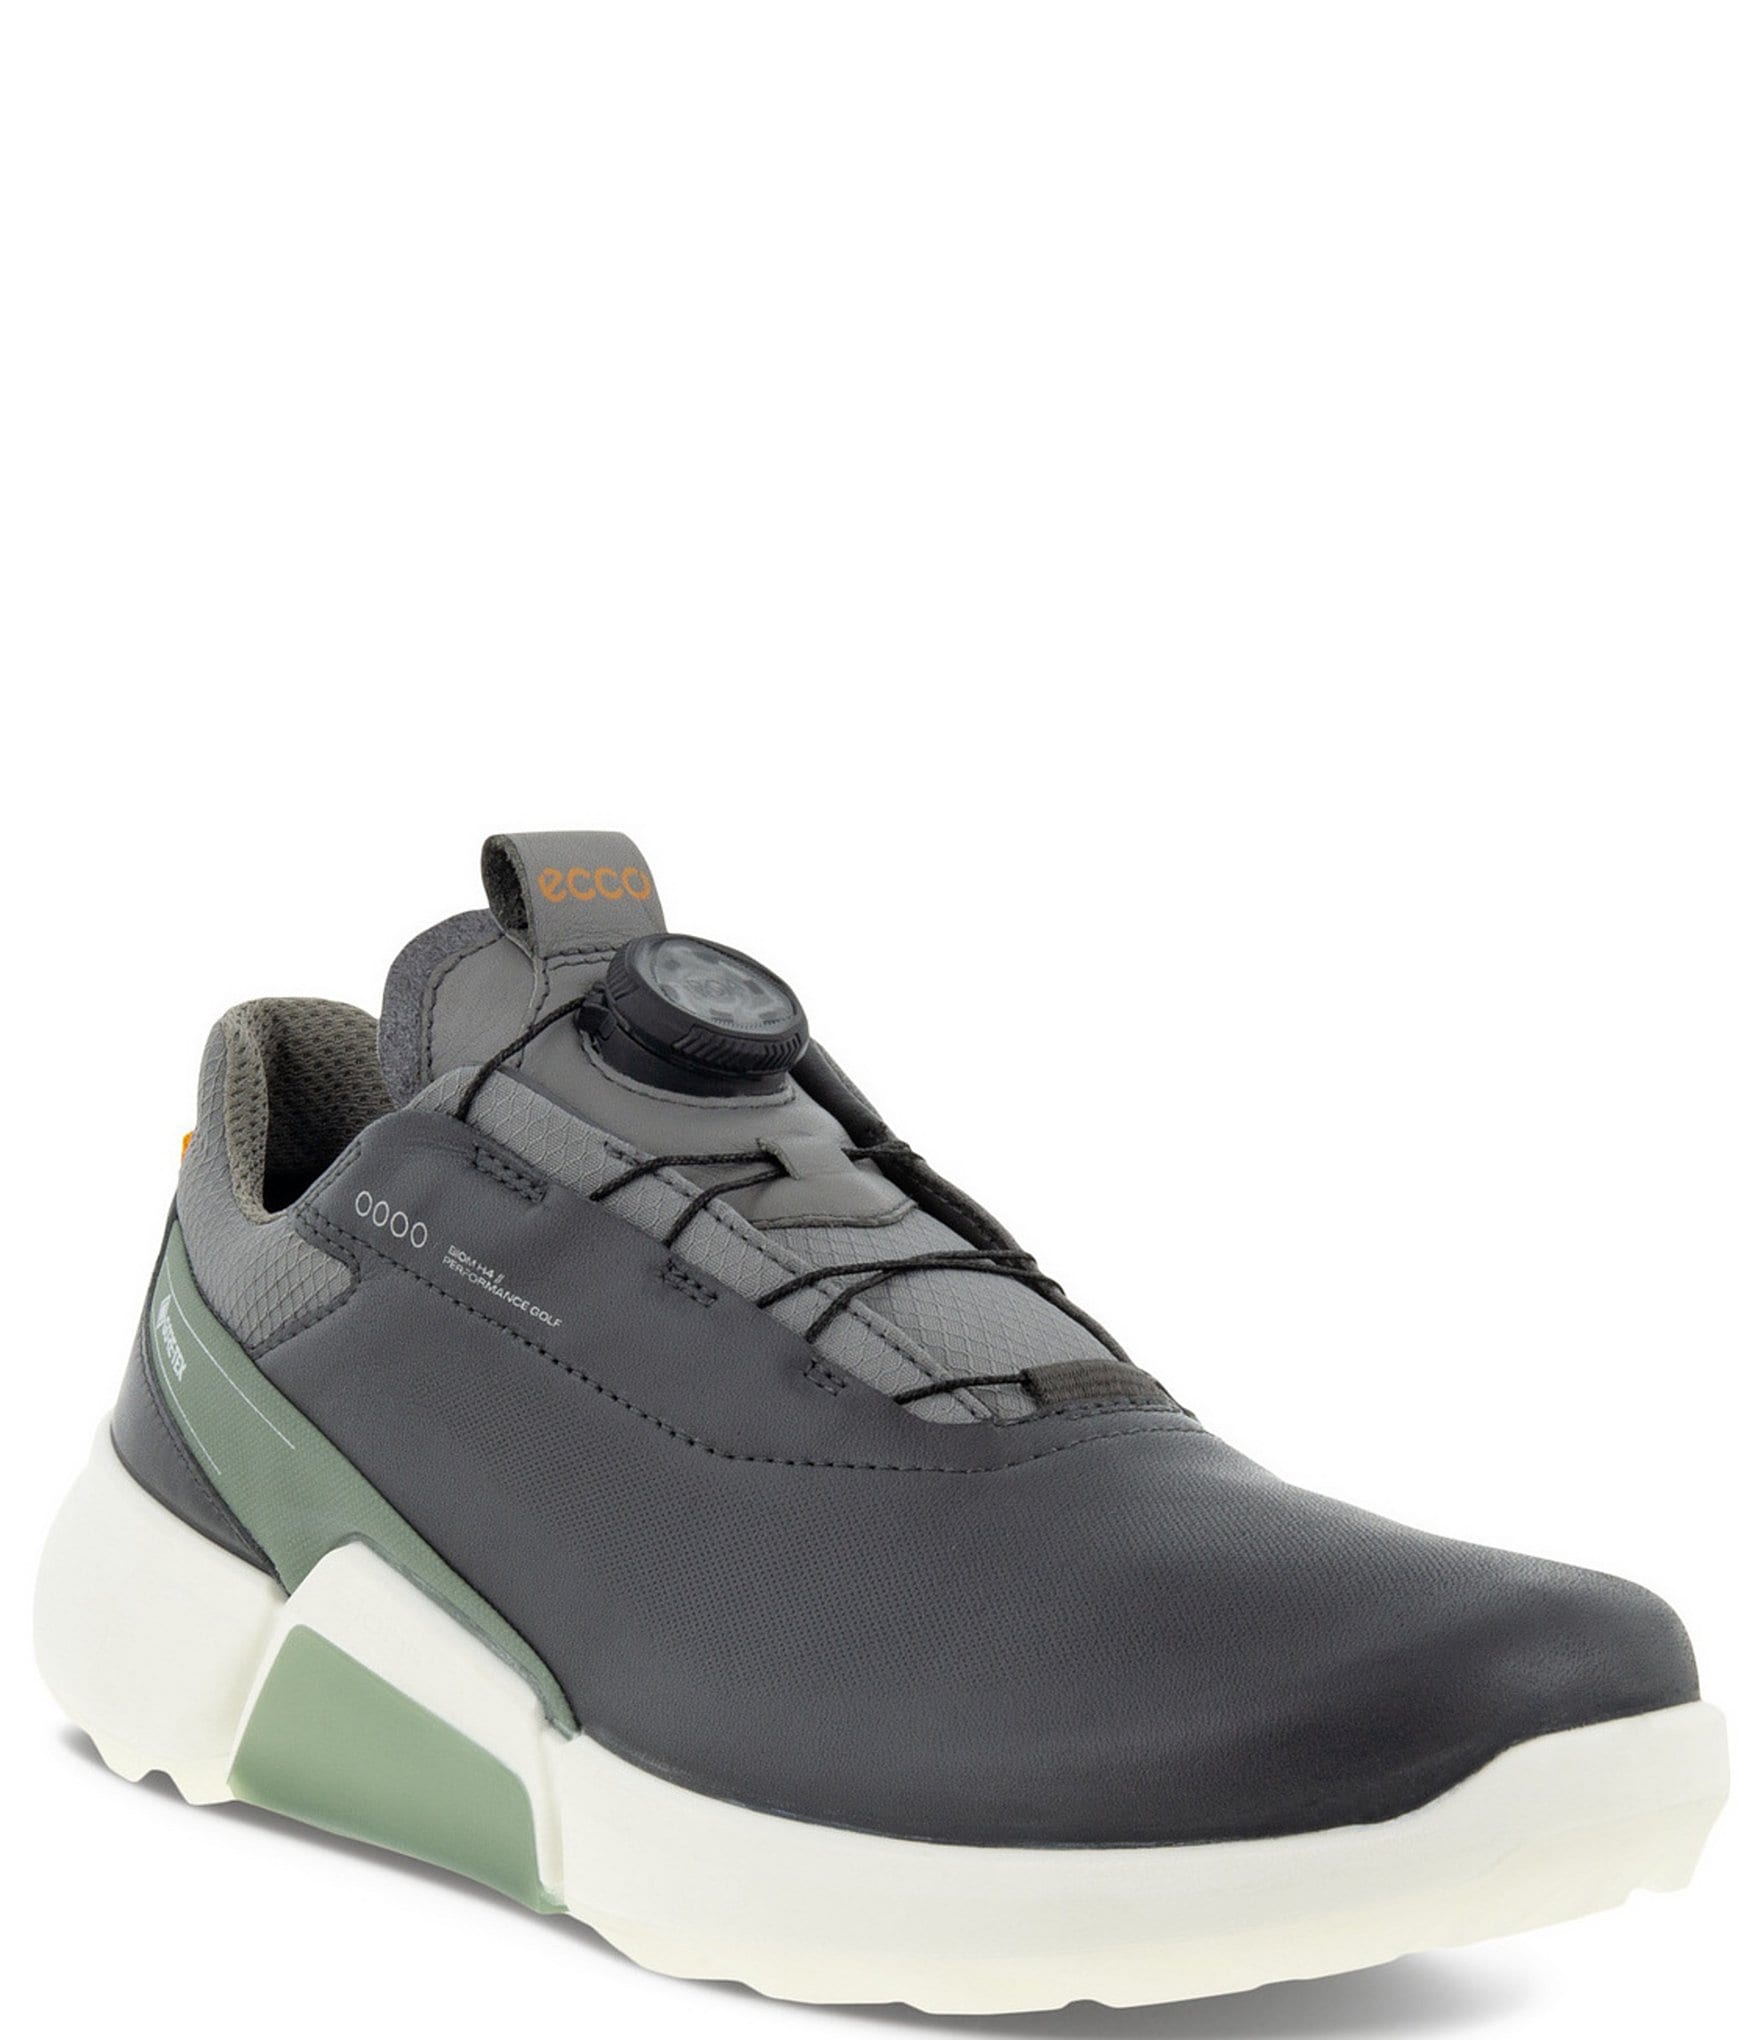 ECCO Men's BIOM H4 BOA Waterproof Leather Golf Shoes | Dillard's